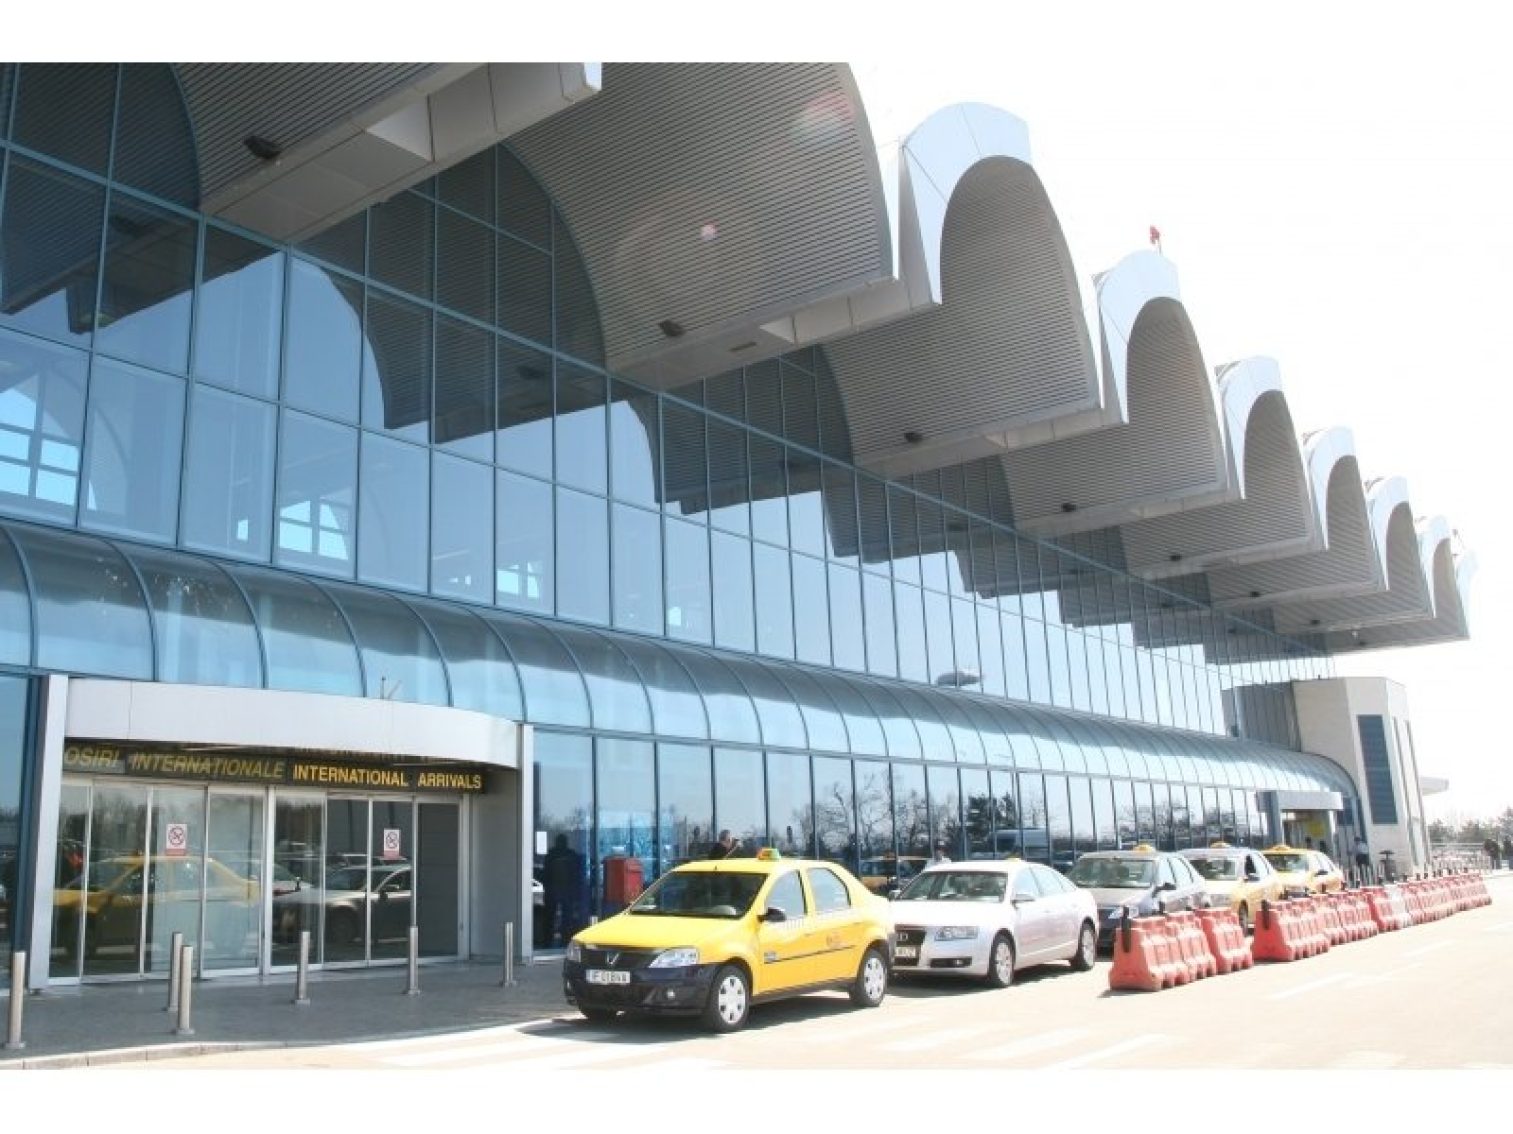 Big Didactic Aeroport 091